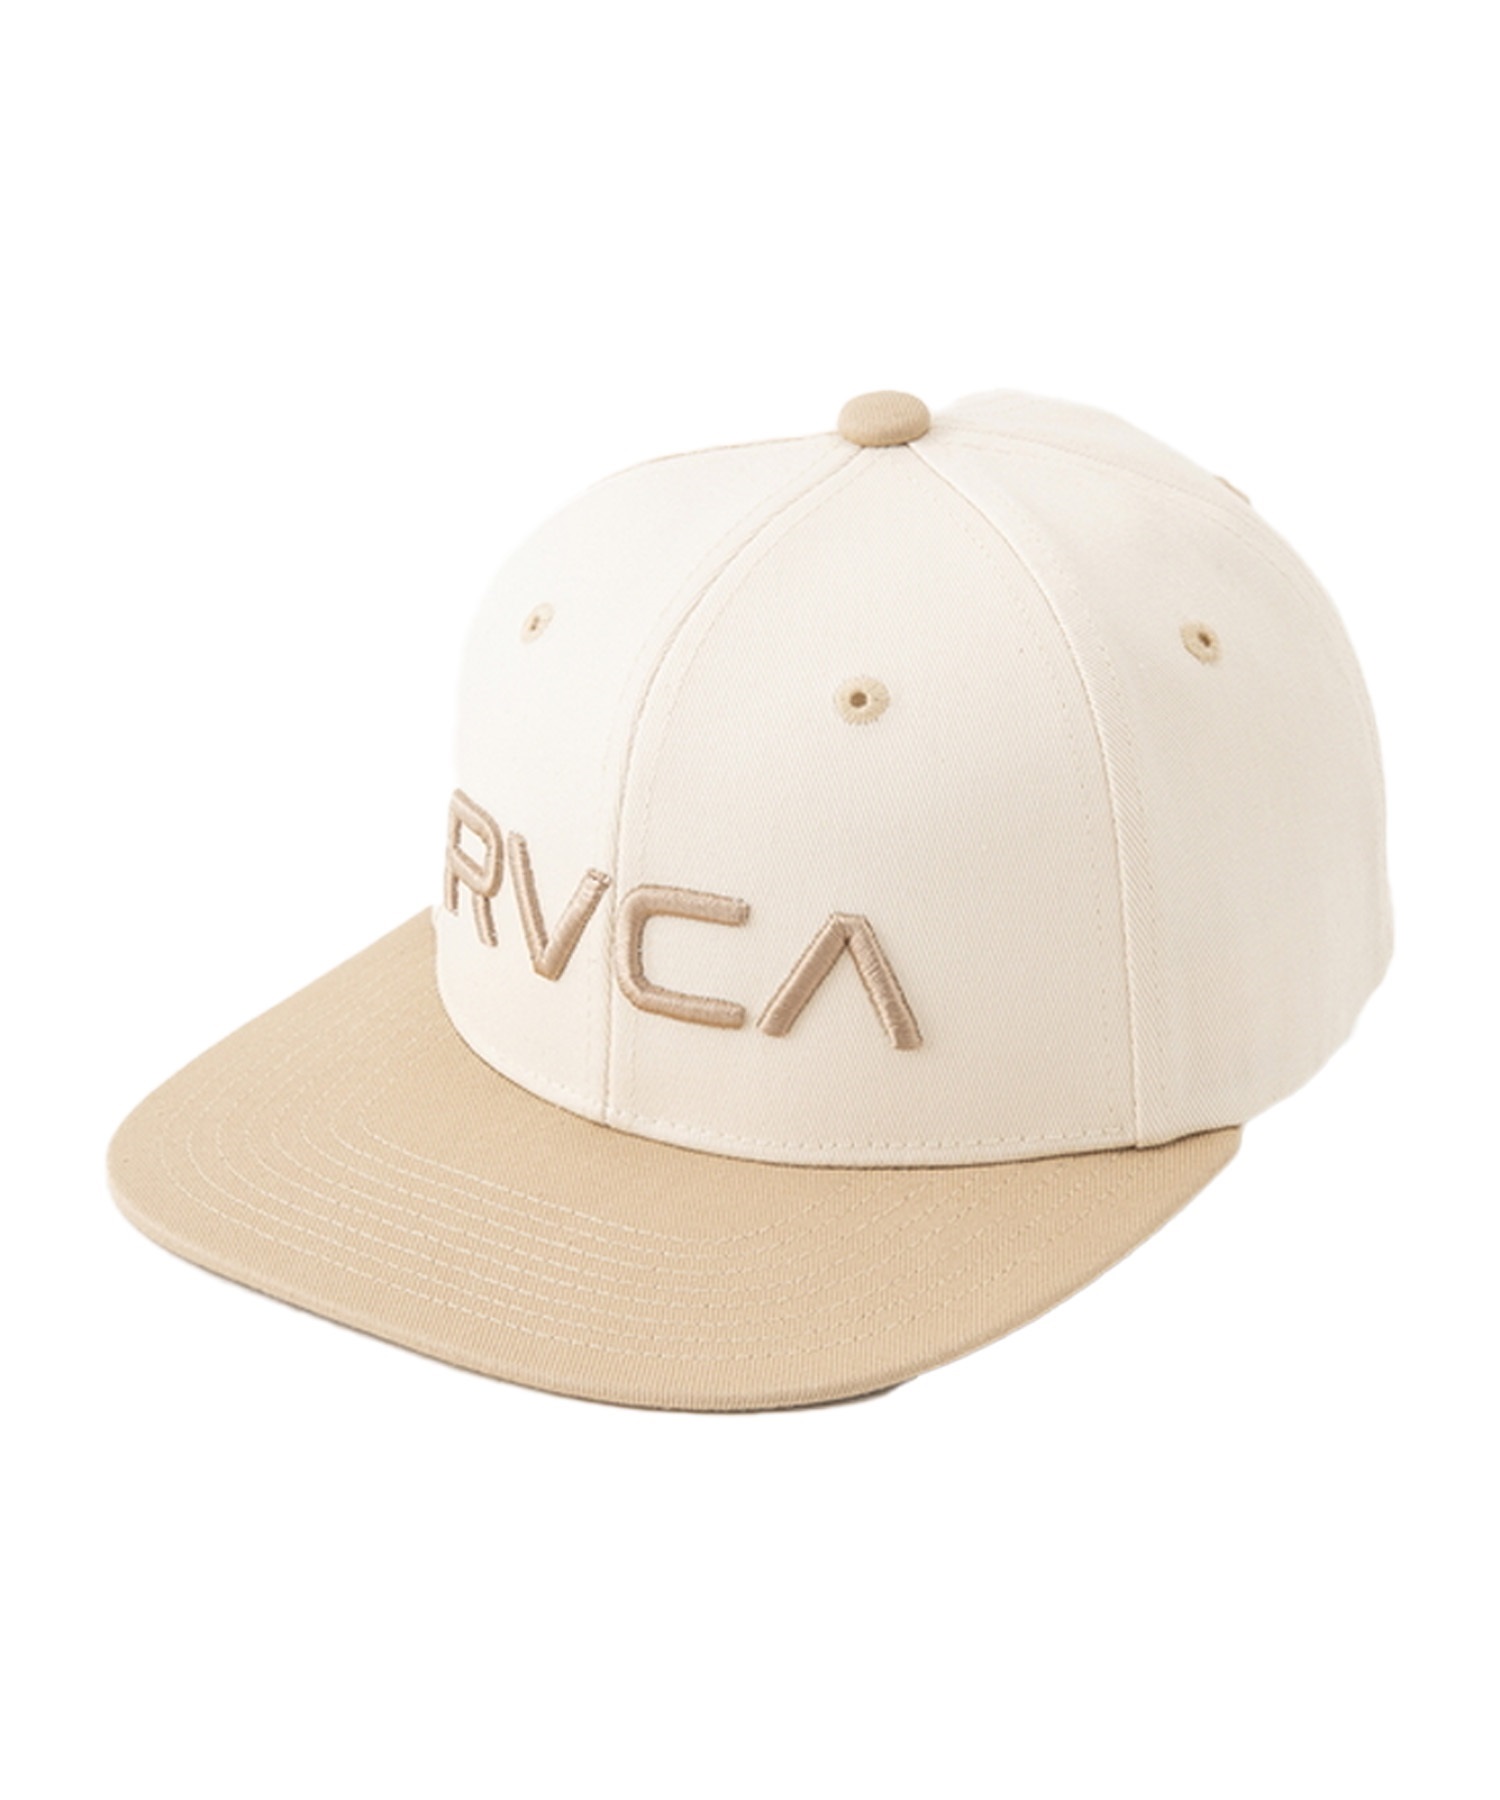 RVCA/ルーカ WILL SNAPBACKII キャップ 帽子 フリーサイズ BE041-911(BBB-FREE)